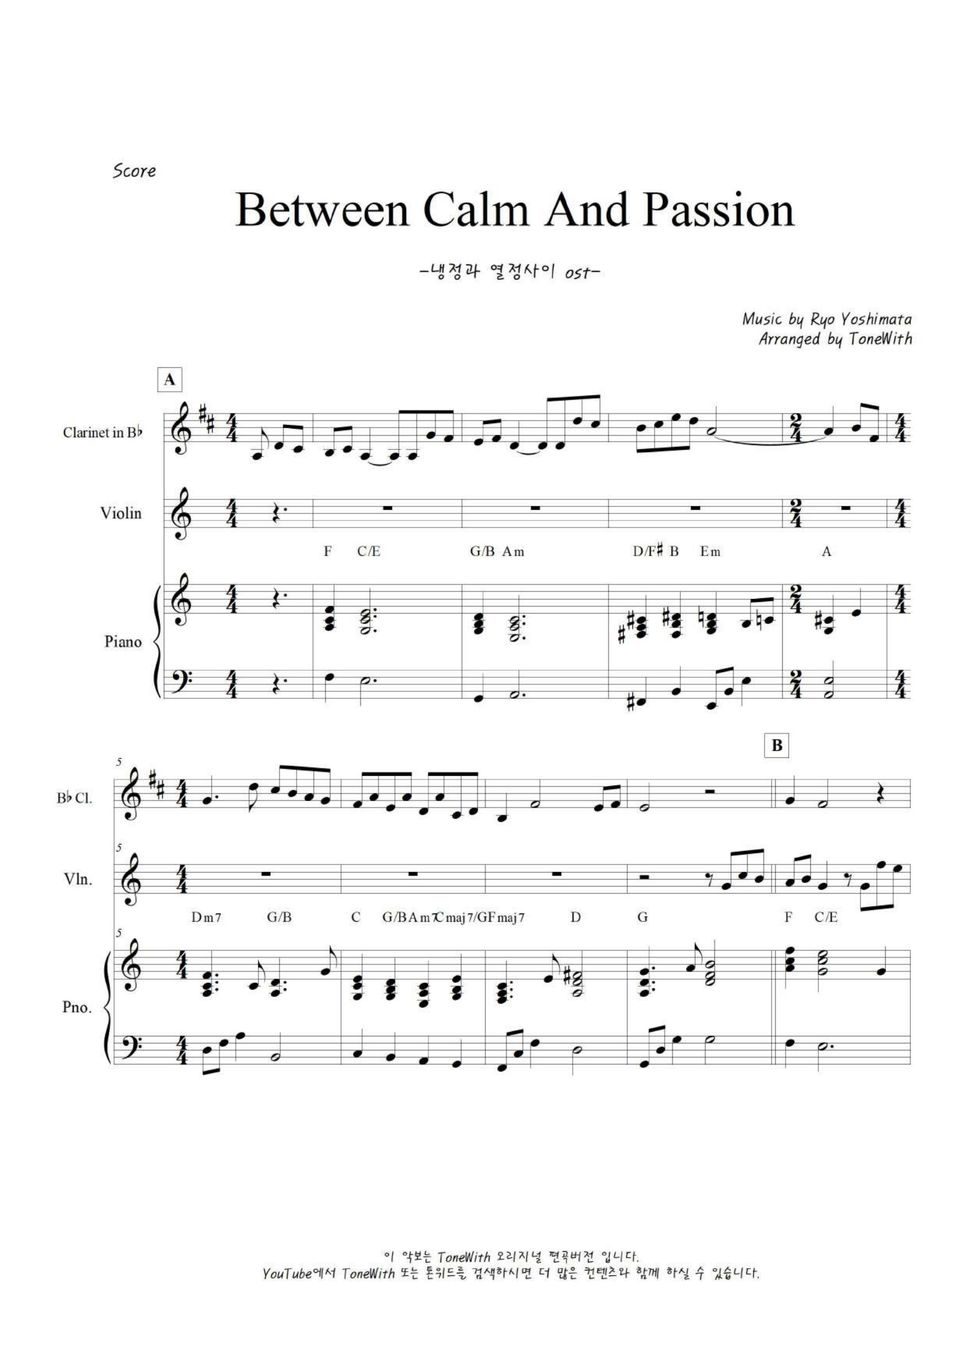 Ryo Yoshimata - 냉정과 열정사이 ost | Between Calm And Passion (피아노/클라리넷/바이올린) by ToneWith  톤위드